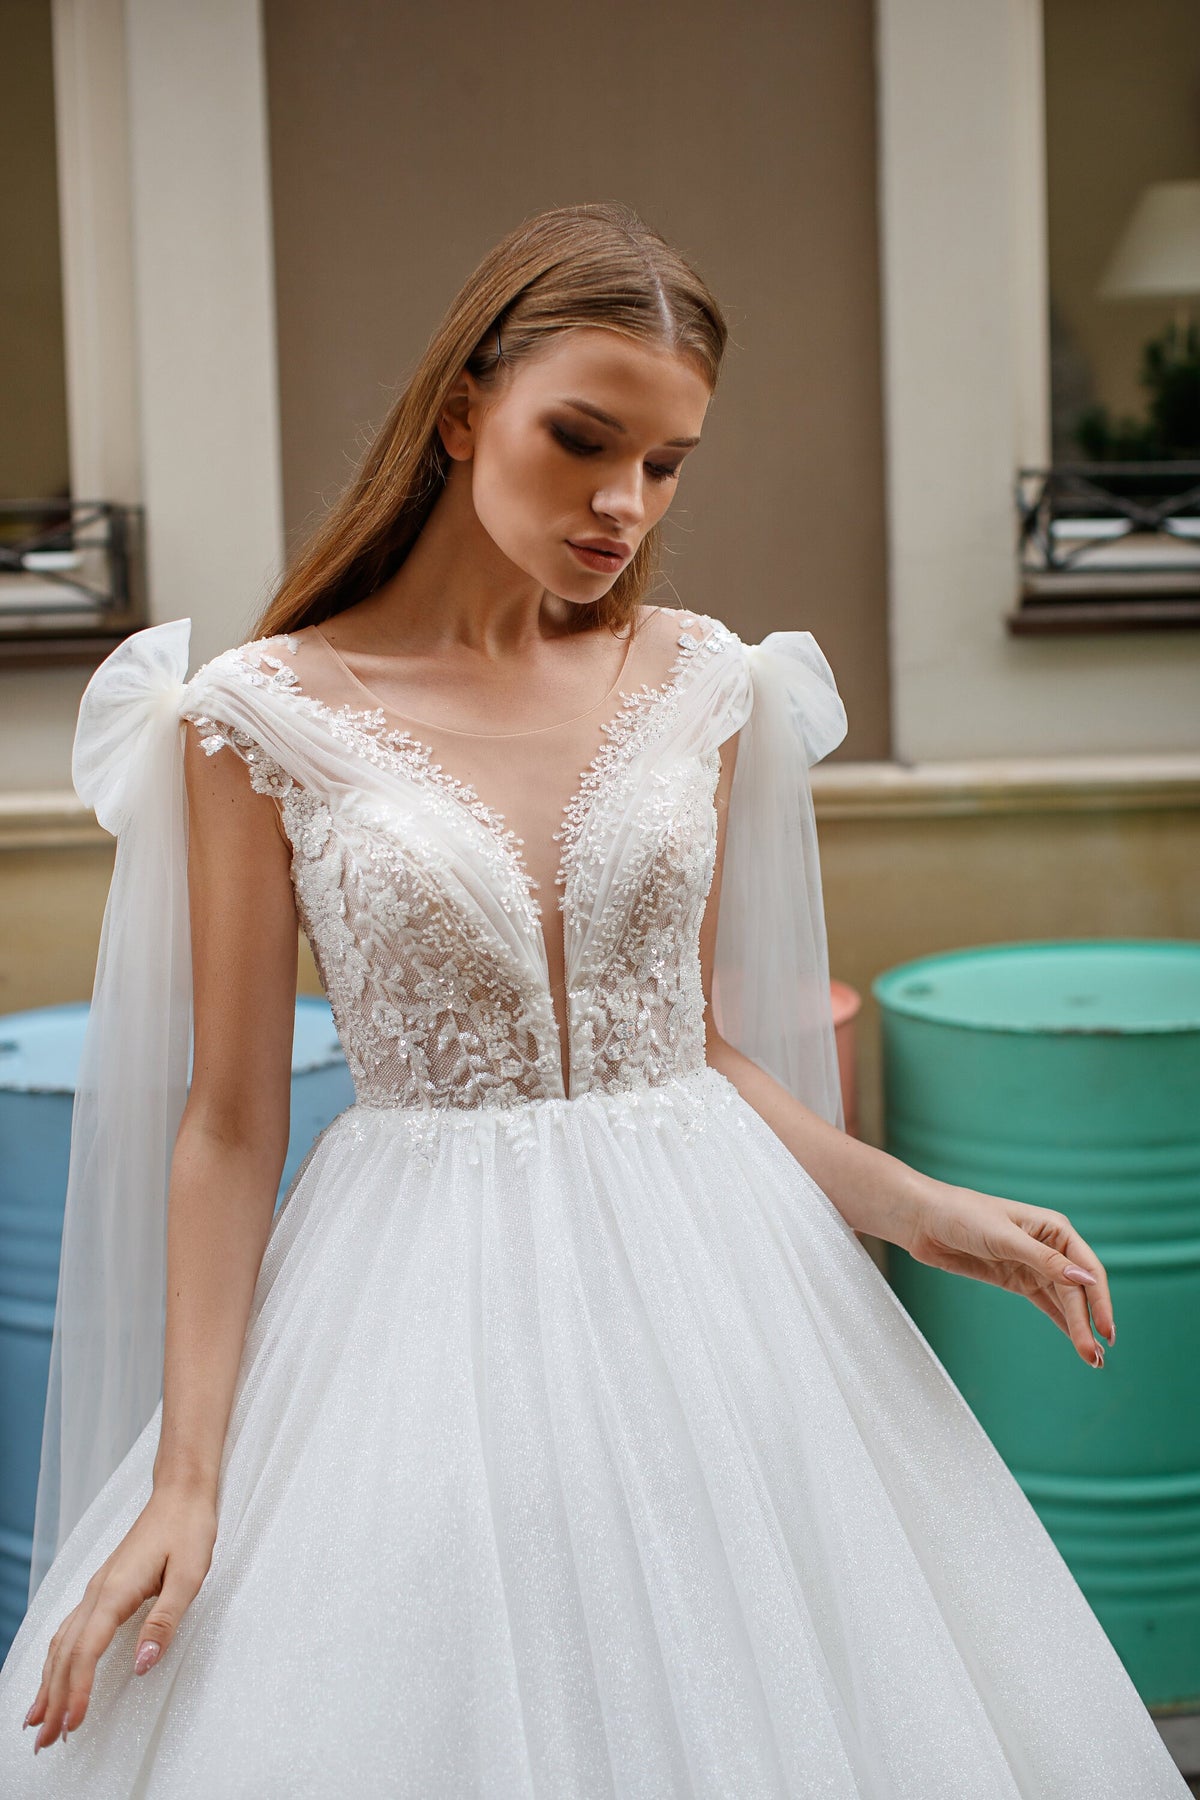 Beautiful Sparkley Off the Shoulder Ties Deep V Neckline Wedding Dress Bridal Gown Lace Bodice Sleeveless Glitter Dress Full Aline Design